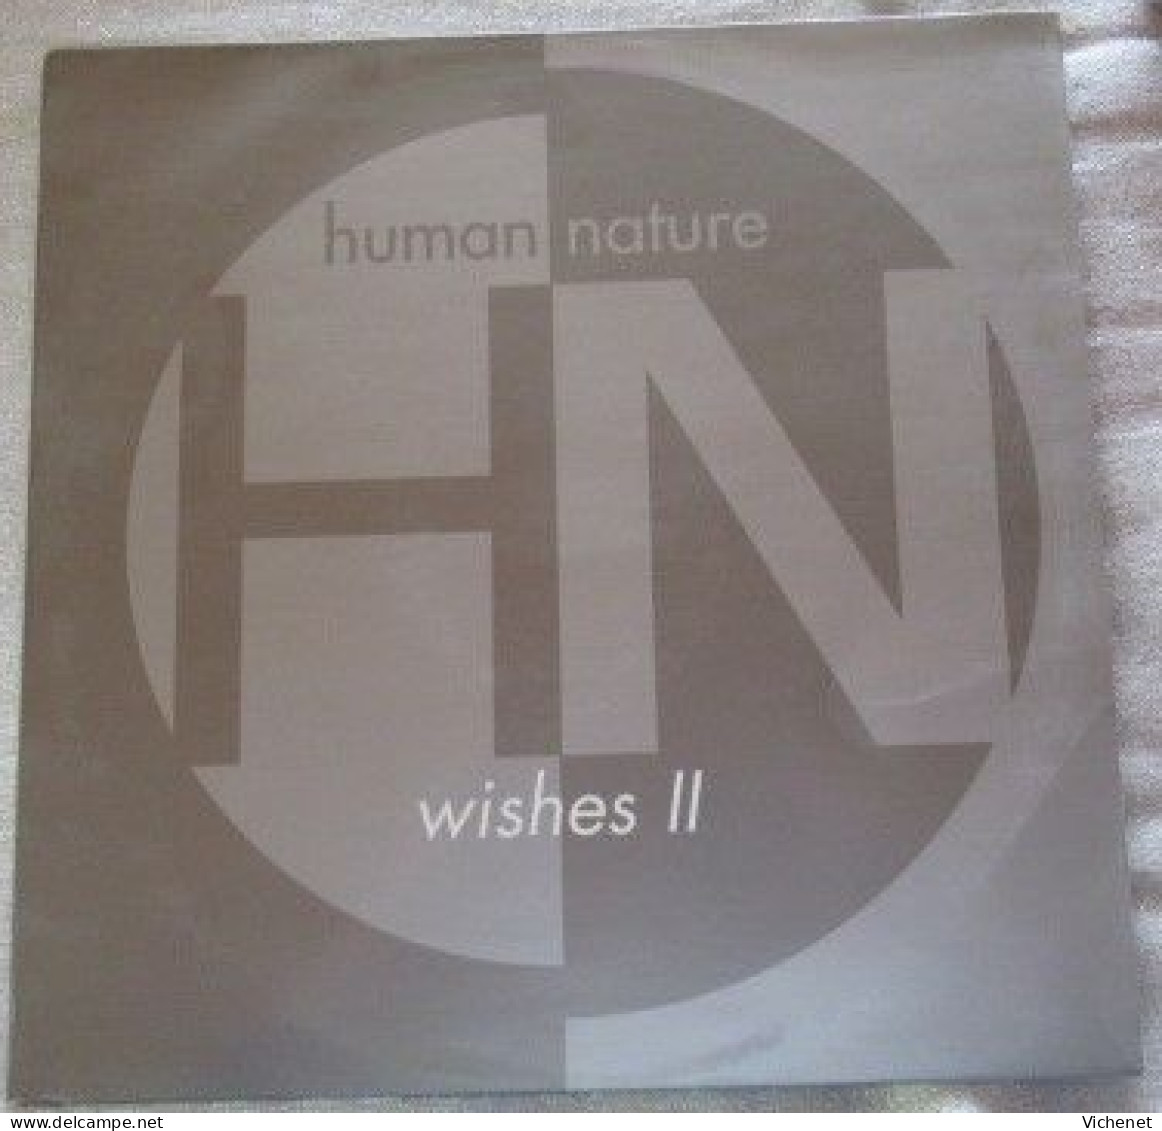 Human Nature – Wishes II - Maxi - 45 Rpm - Maxi-Single